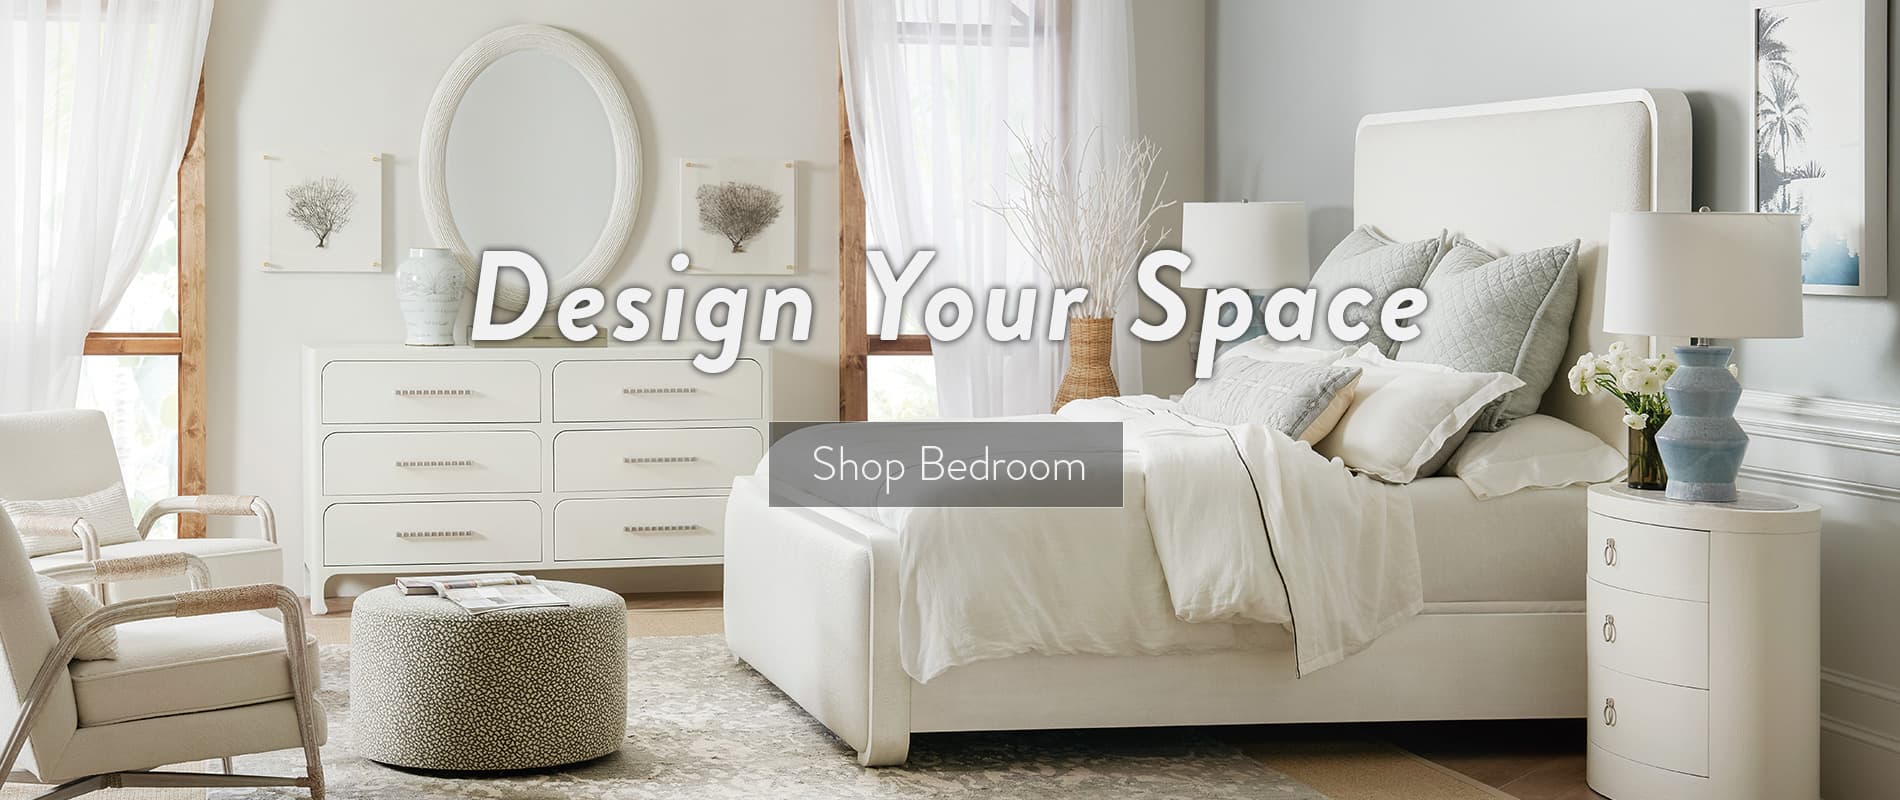 Design Your Space - Shop Bedroom